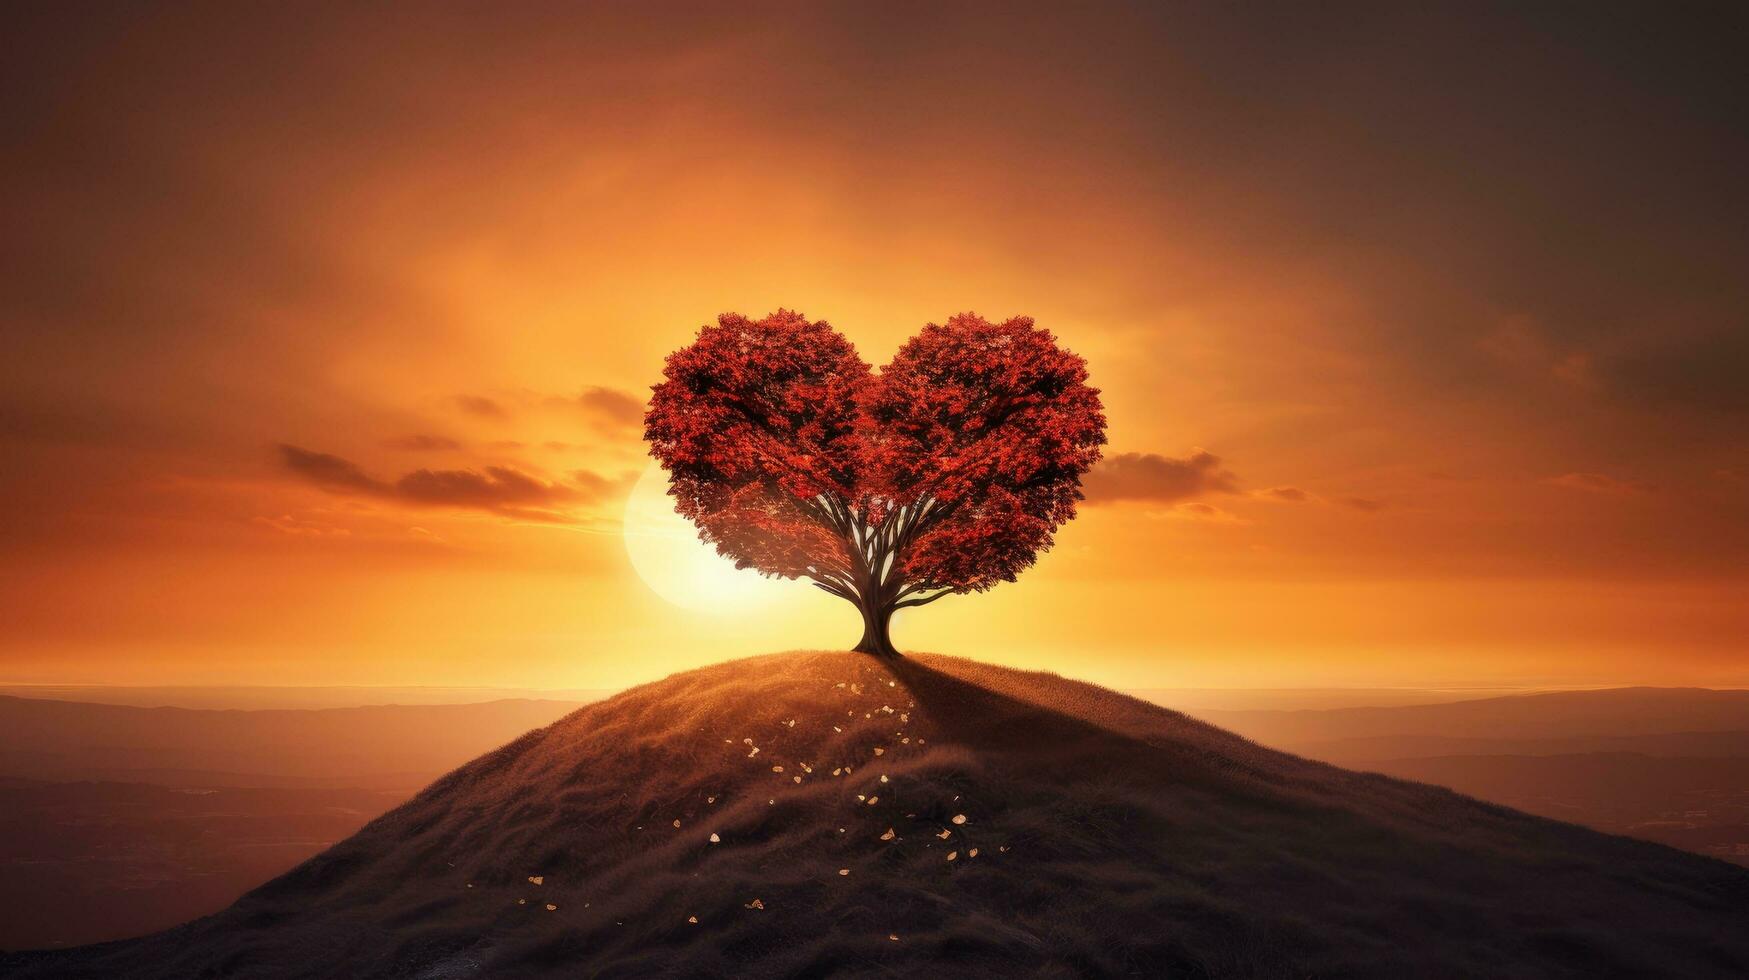 Tree silhouette atop sunlit mound heart shaped symbolizing love photo